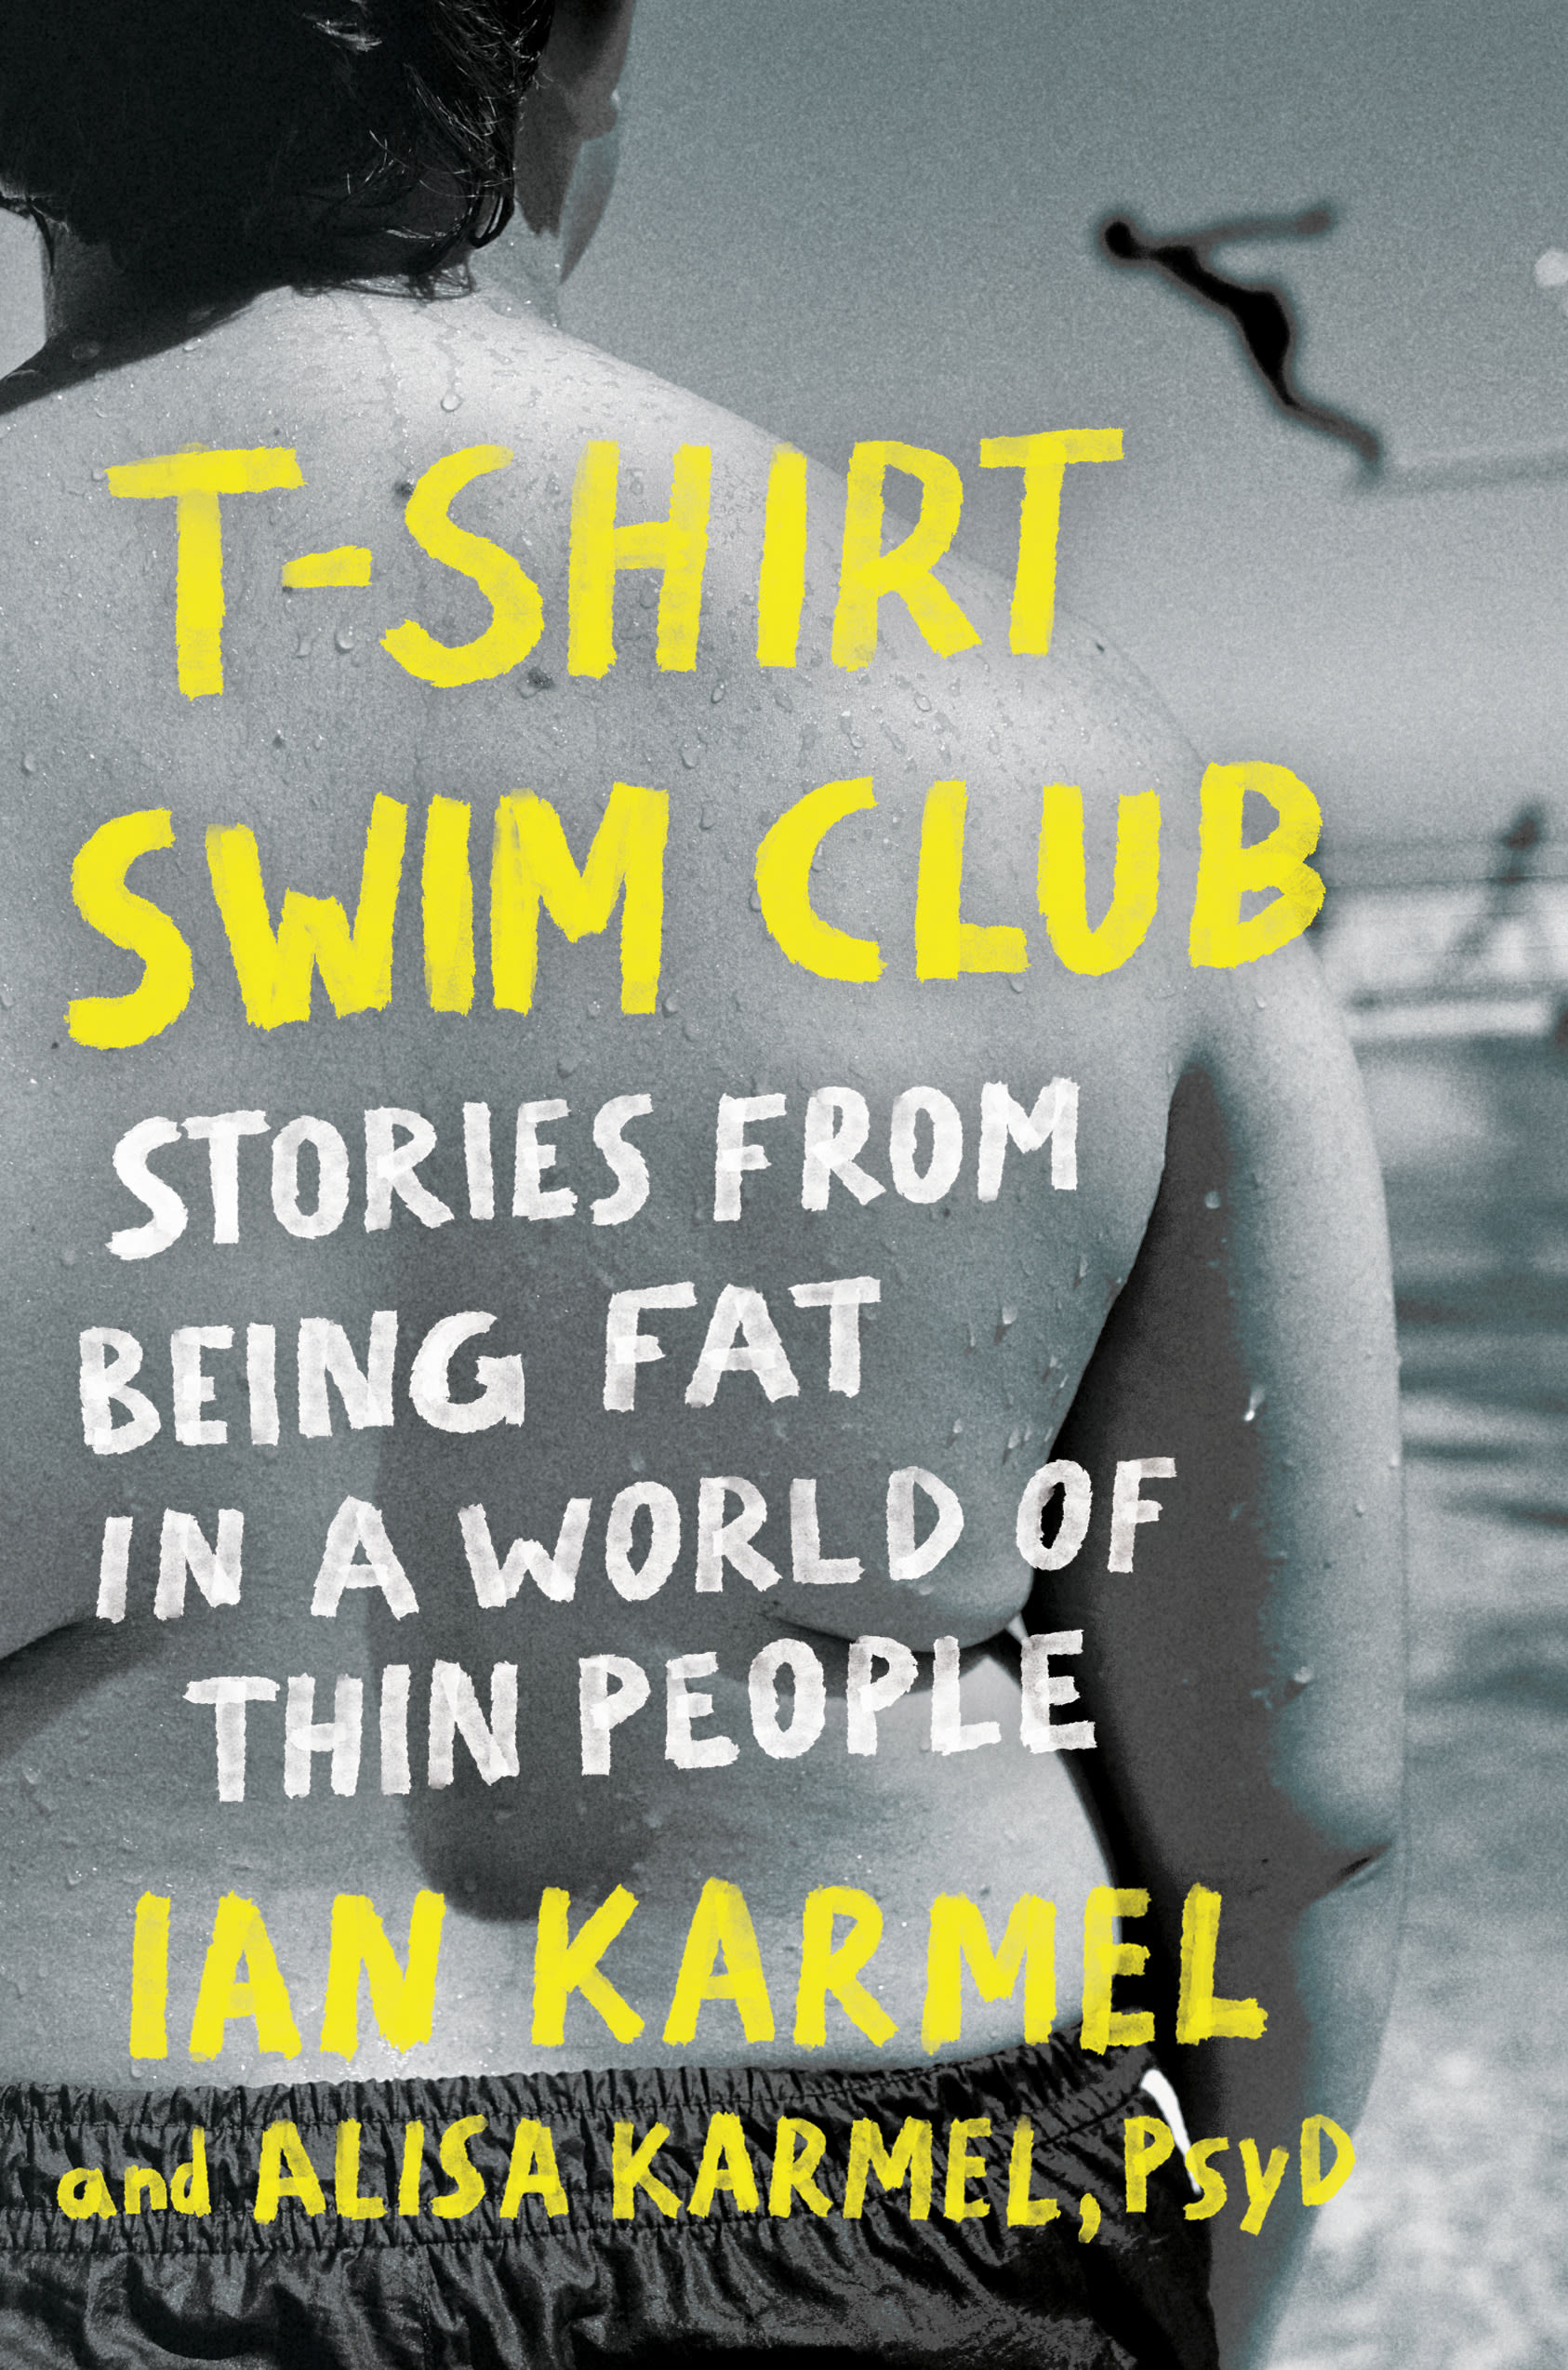 Ian Karmel regrets writing fat jokes for James Corden